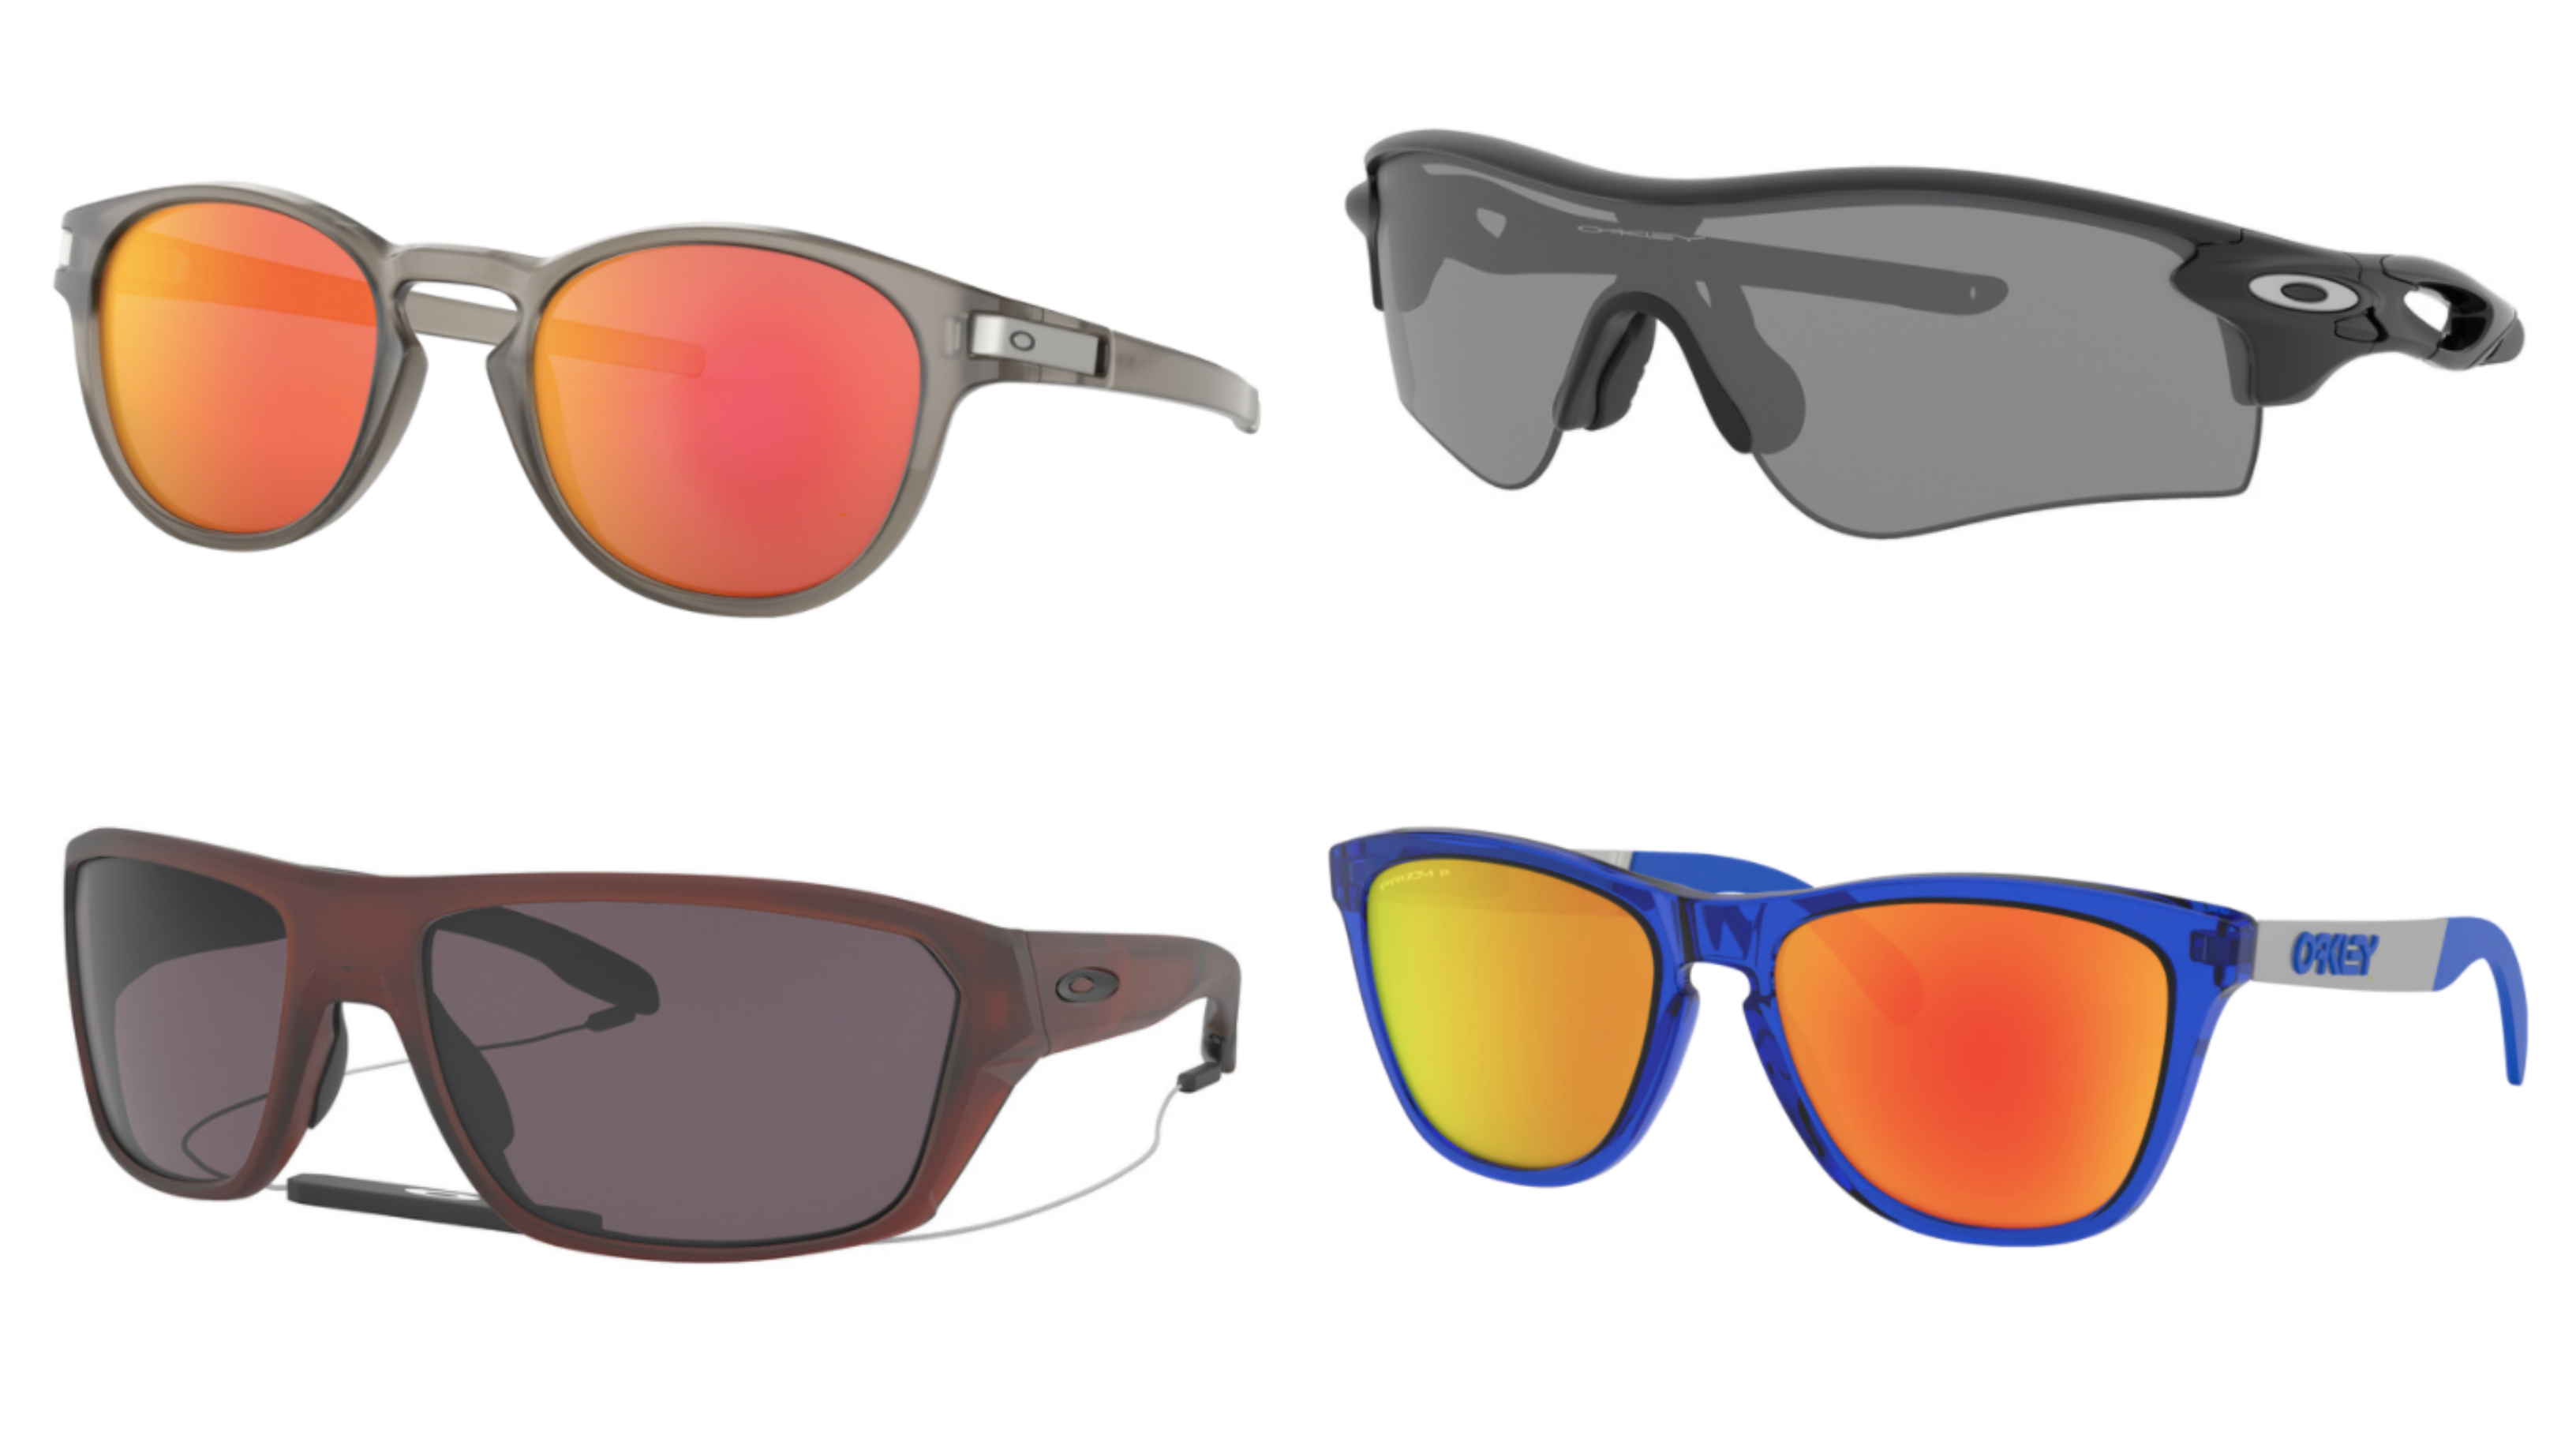 Oakley Sunglasses Lens Peeling & Flaking | Top 3 Causes & Fixes